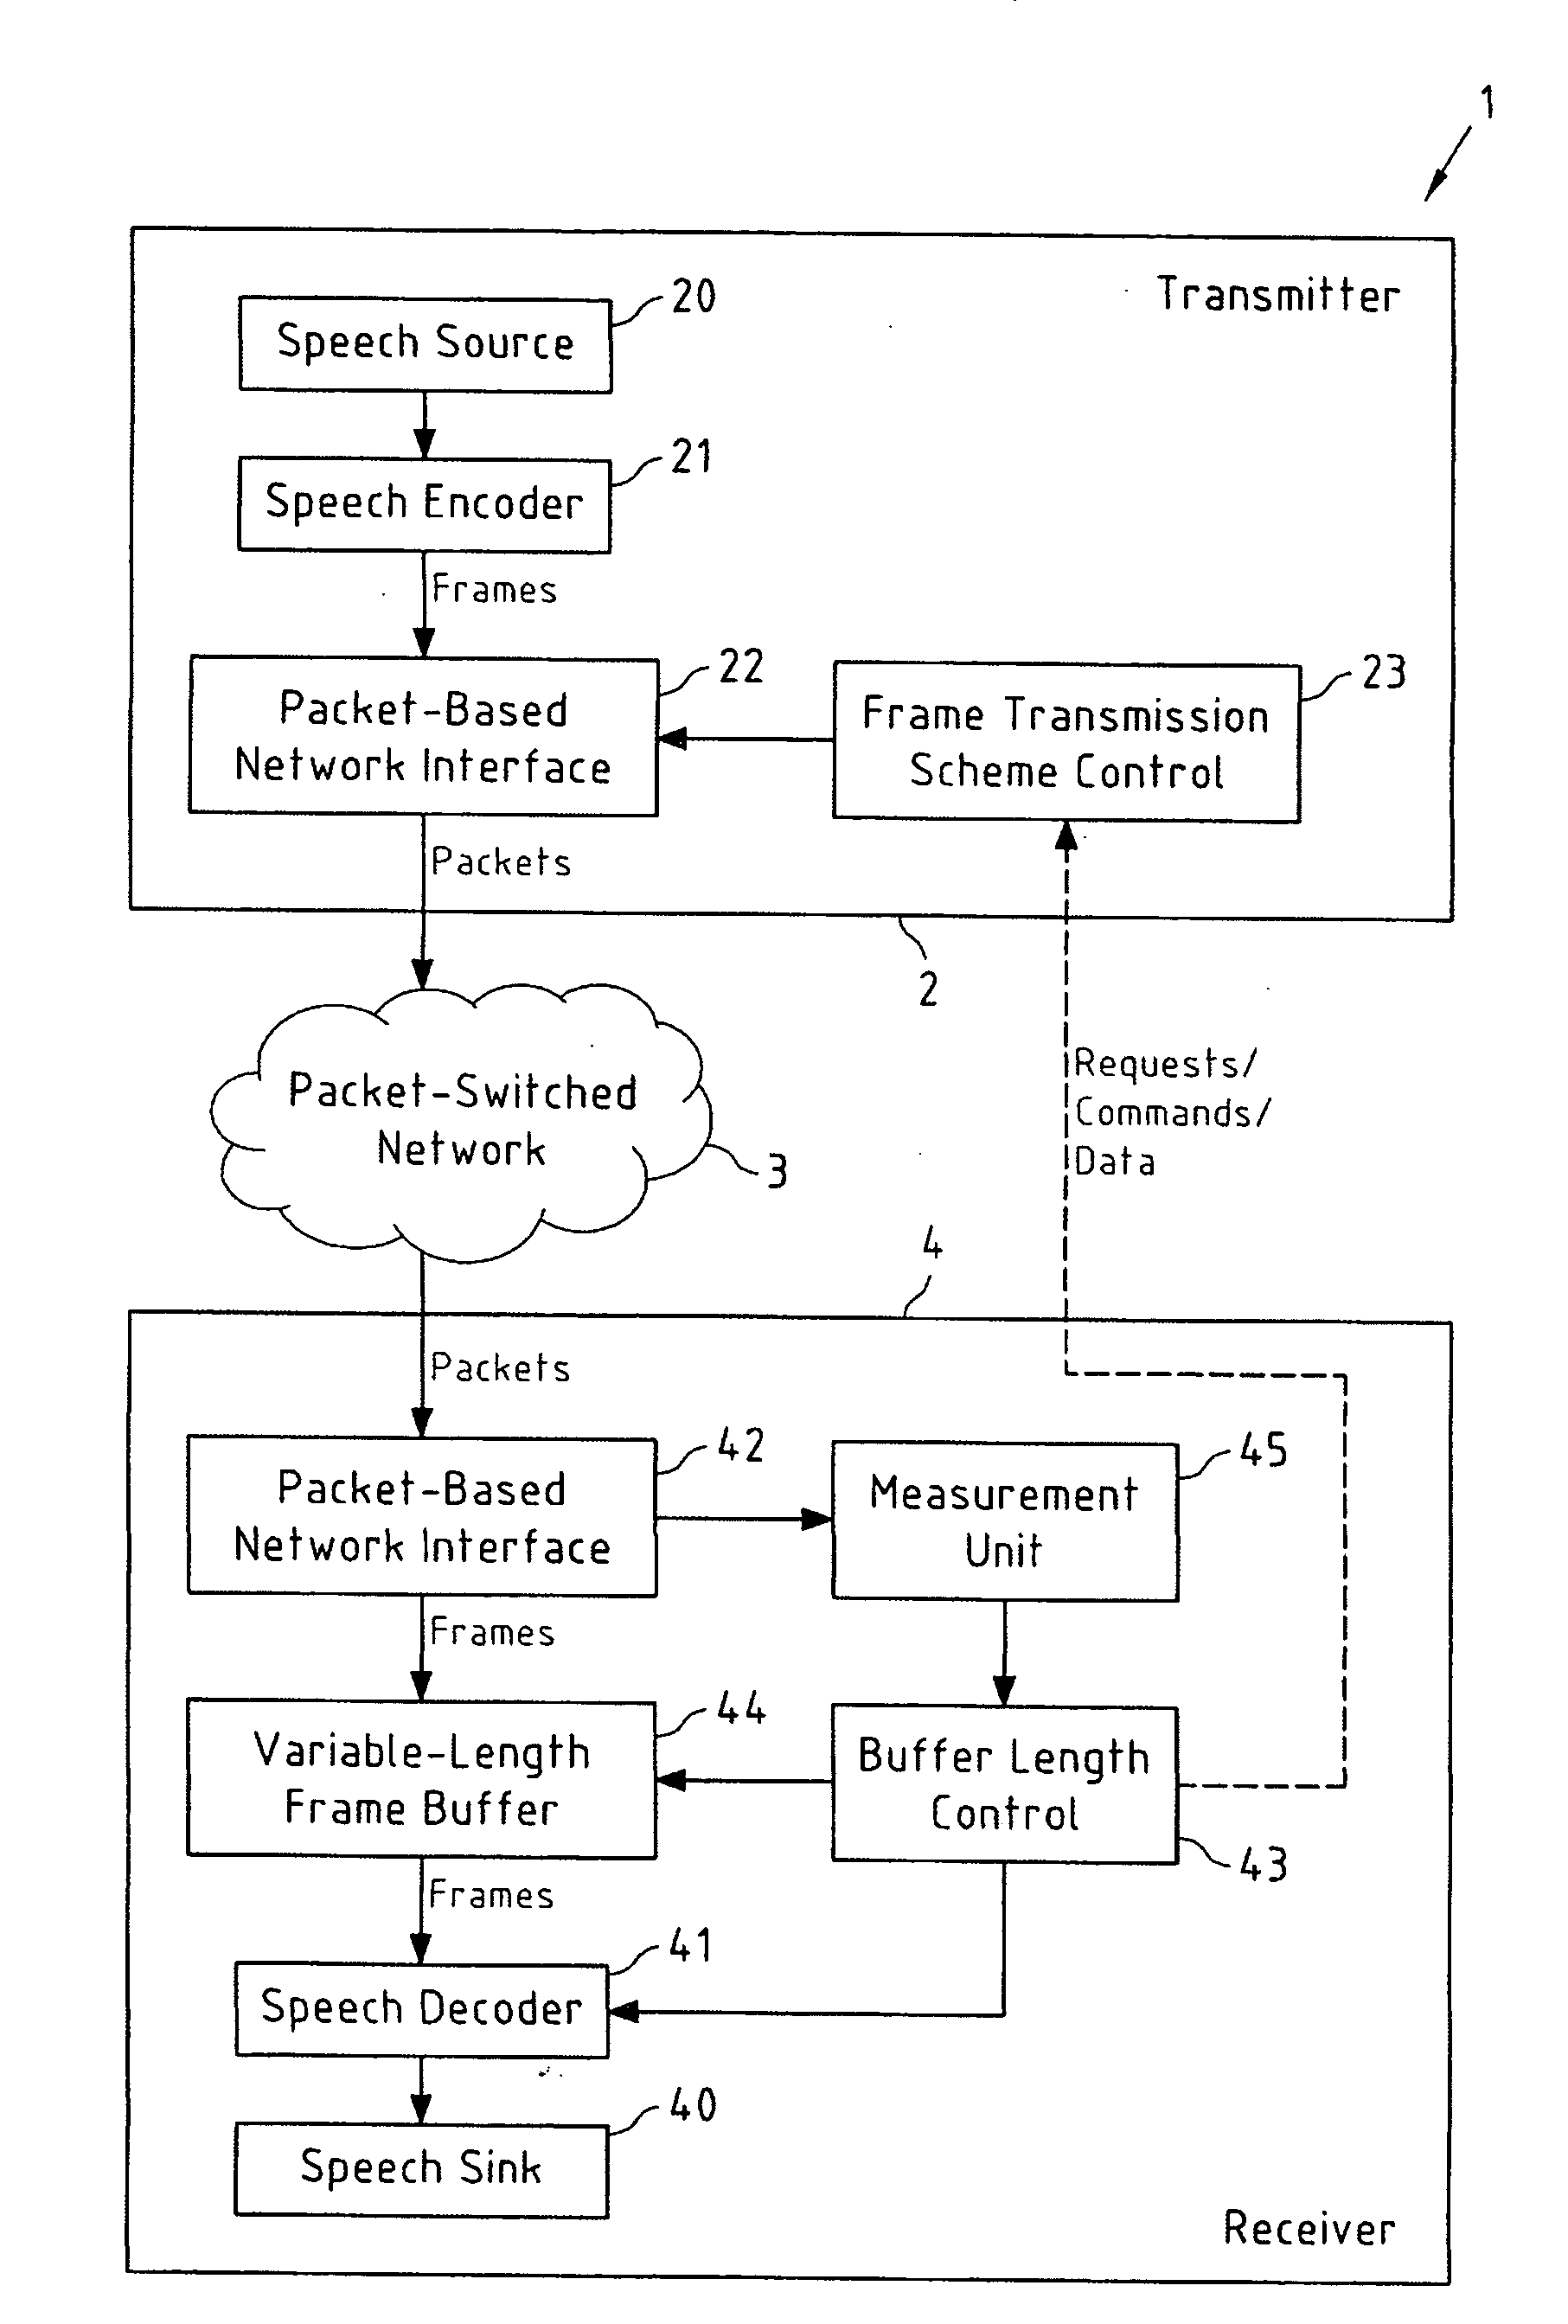 Transmission scheme dependent control of a frame buffer